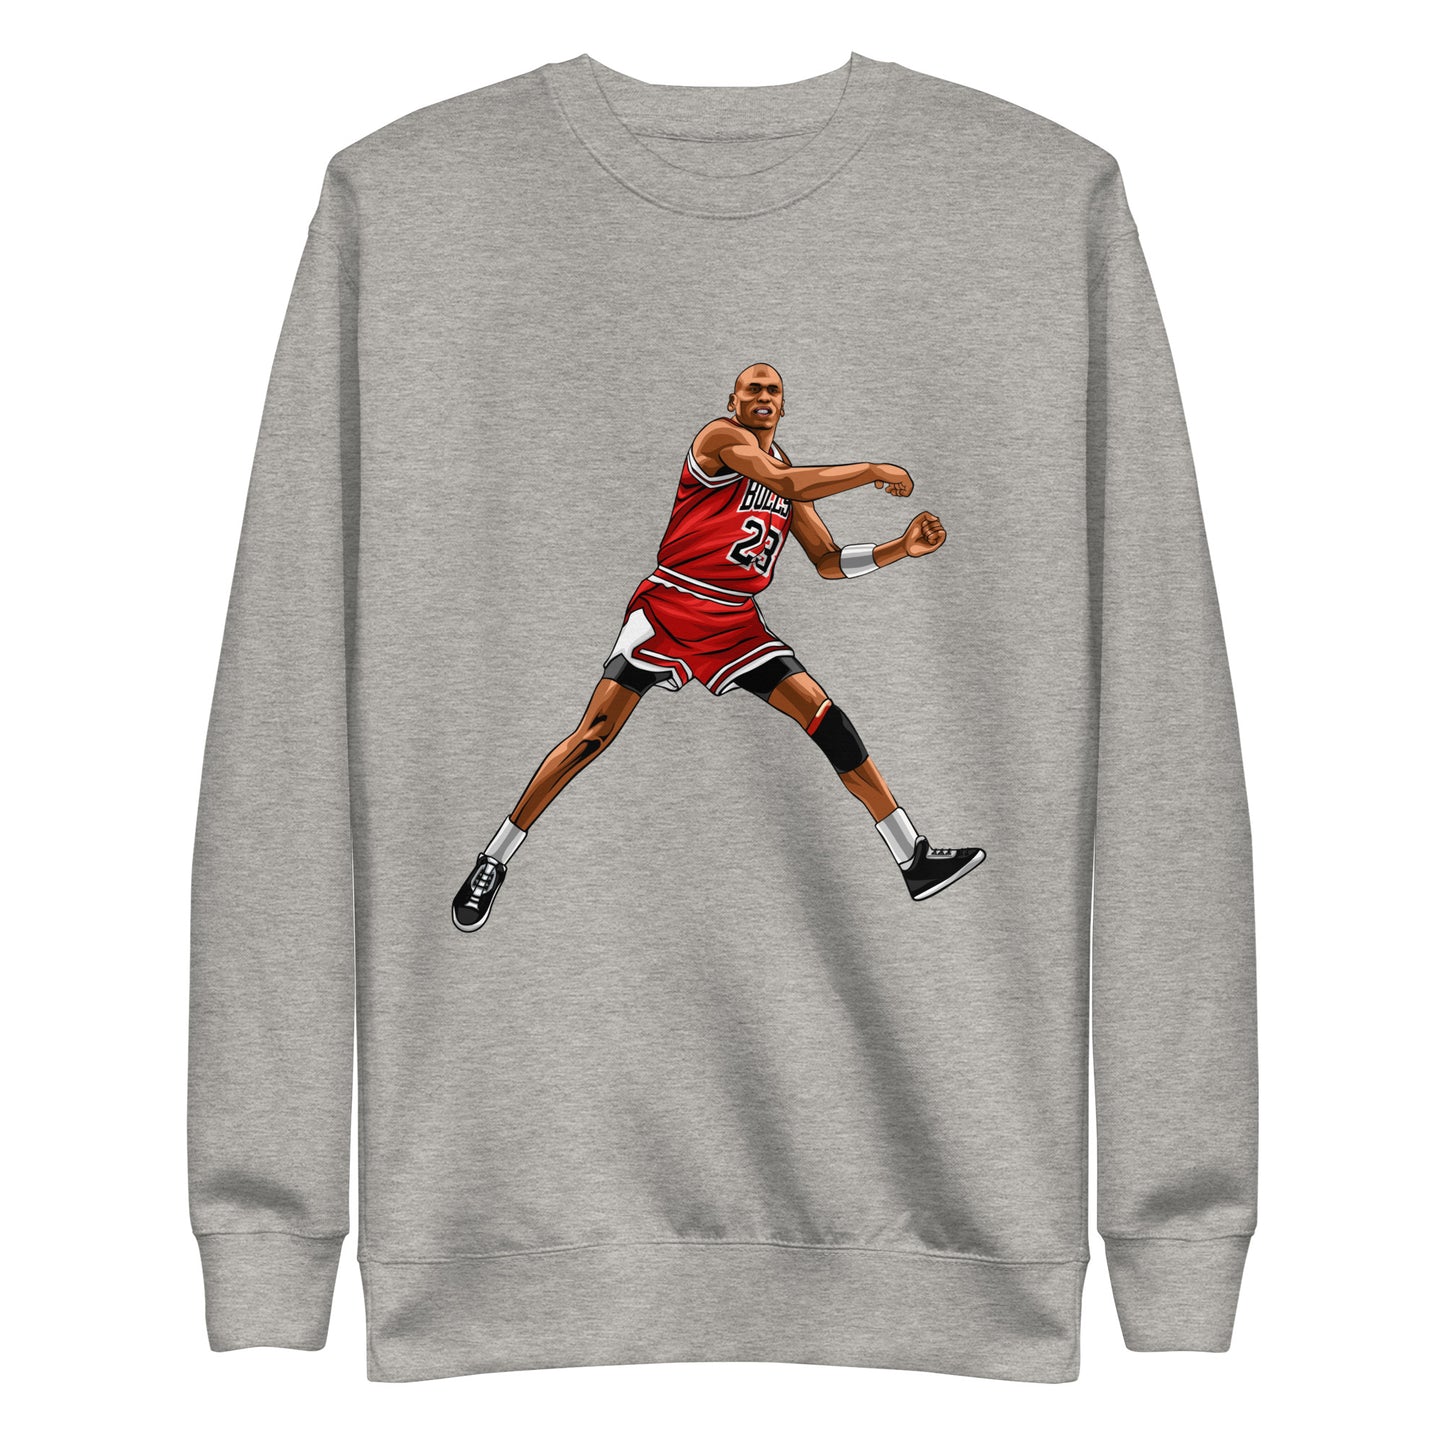 Michael Jordan - "The Shot" sweatshirt